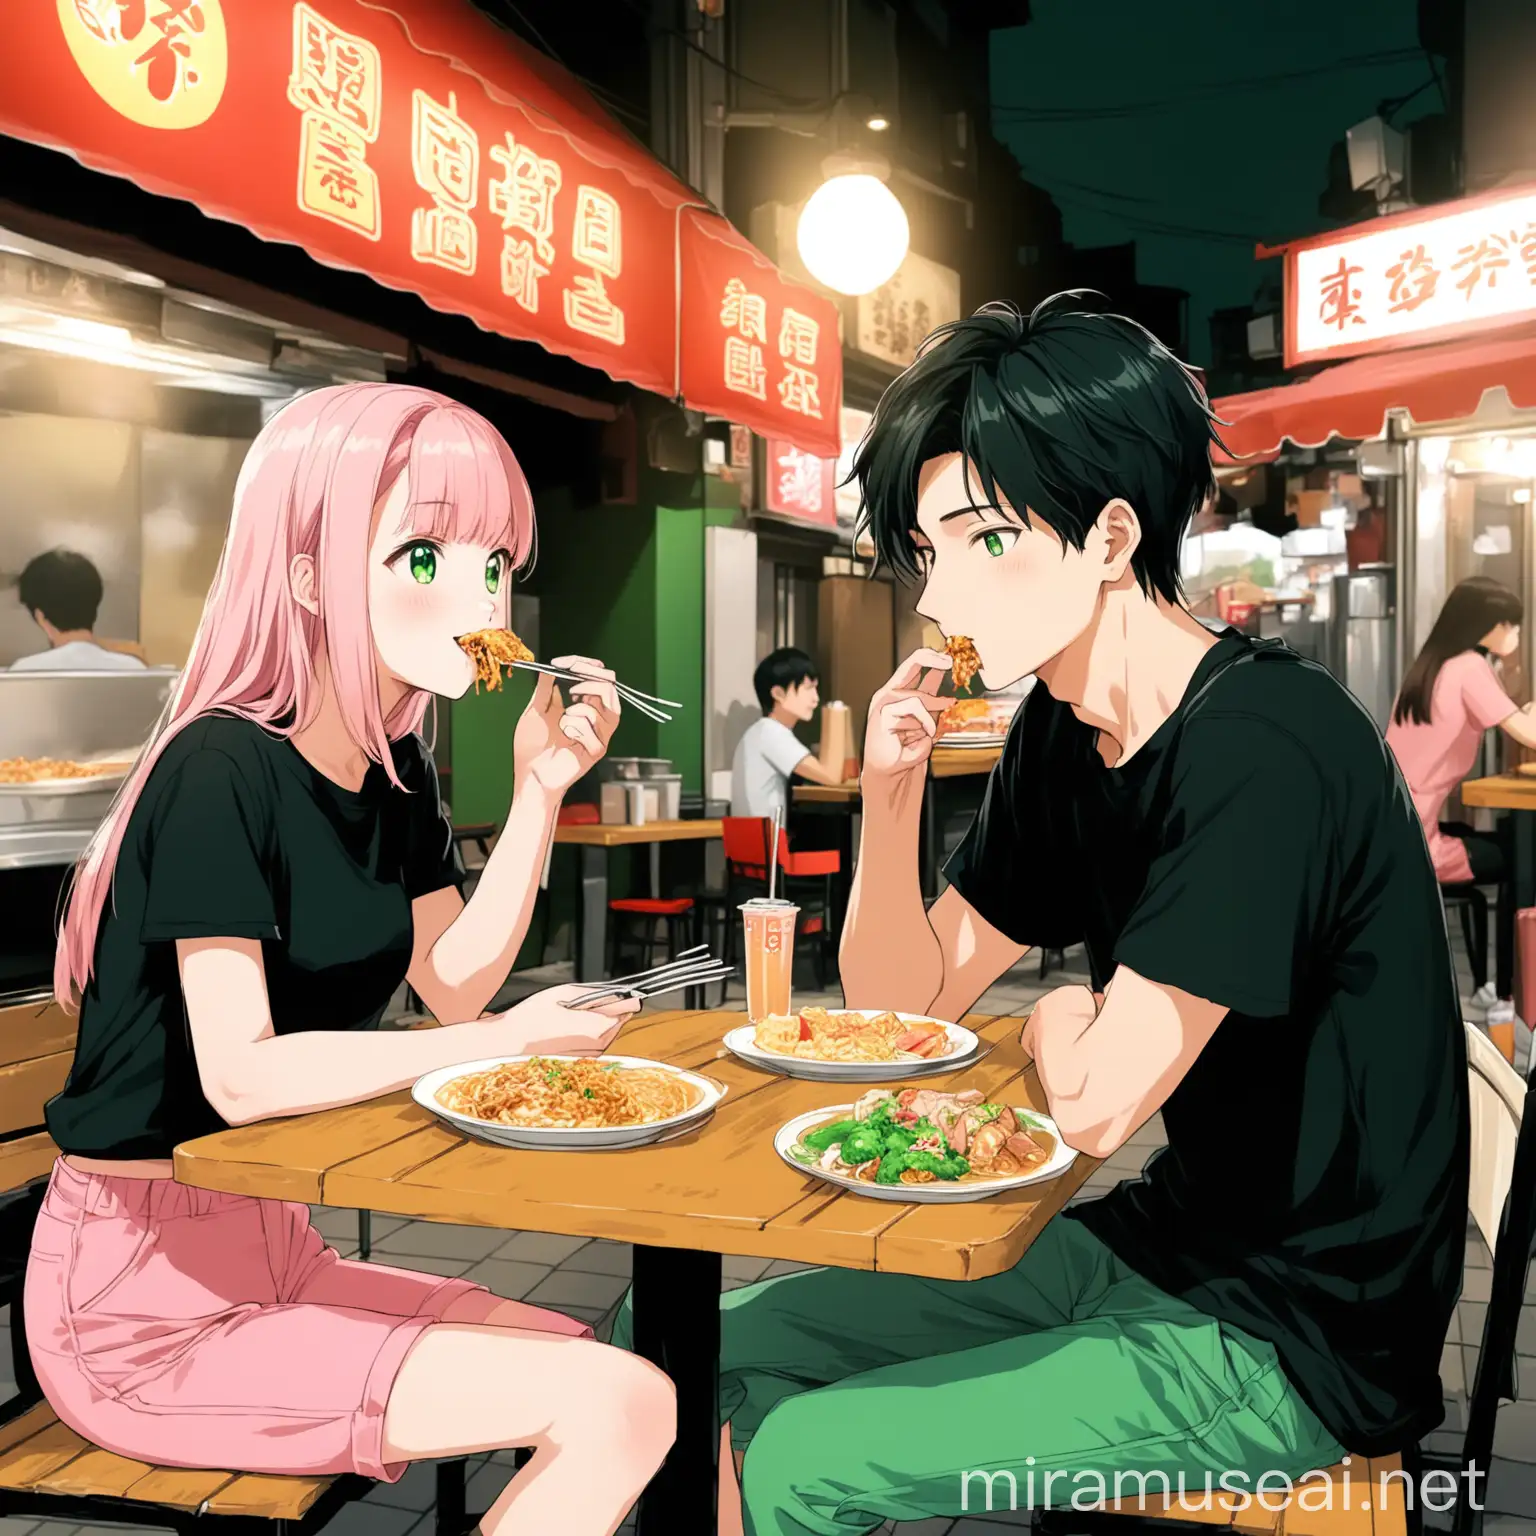 Young Couple Enjoying Taiwanese Cuisine at Street Restaurant